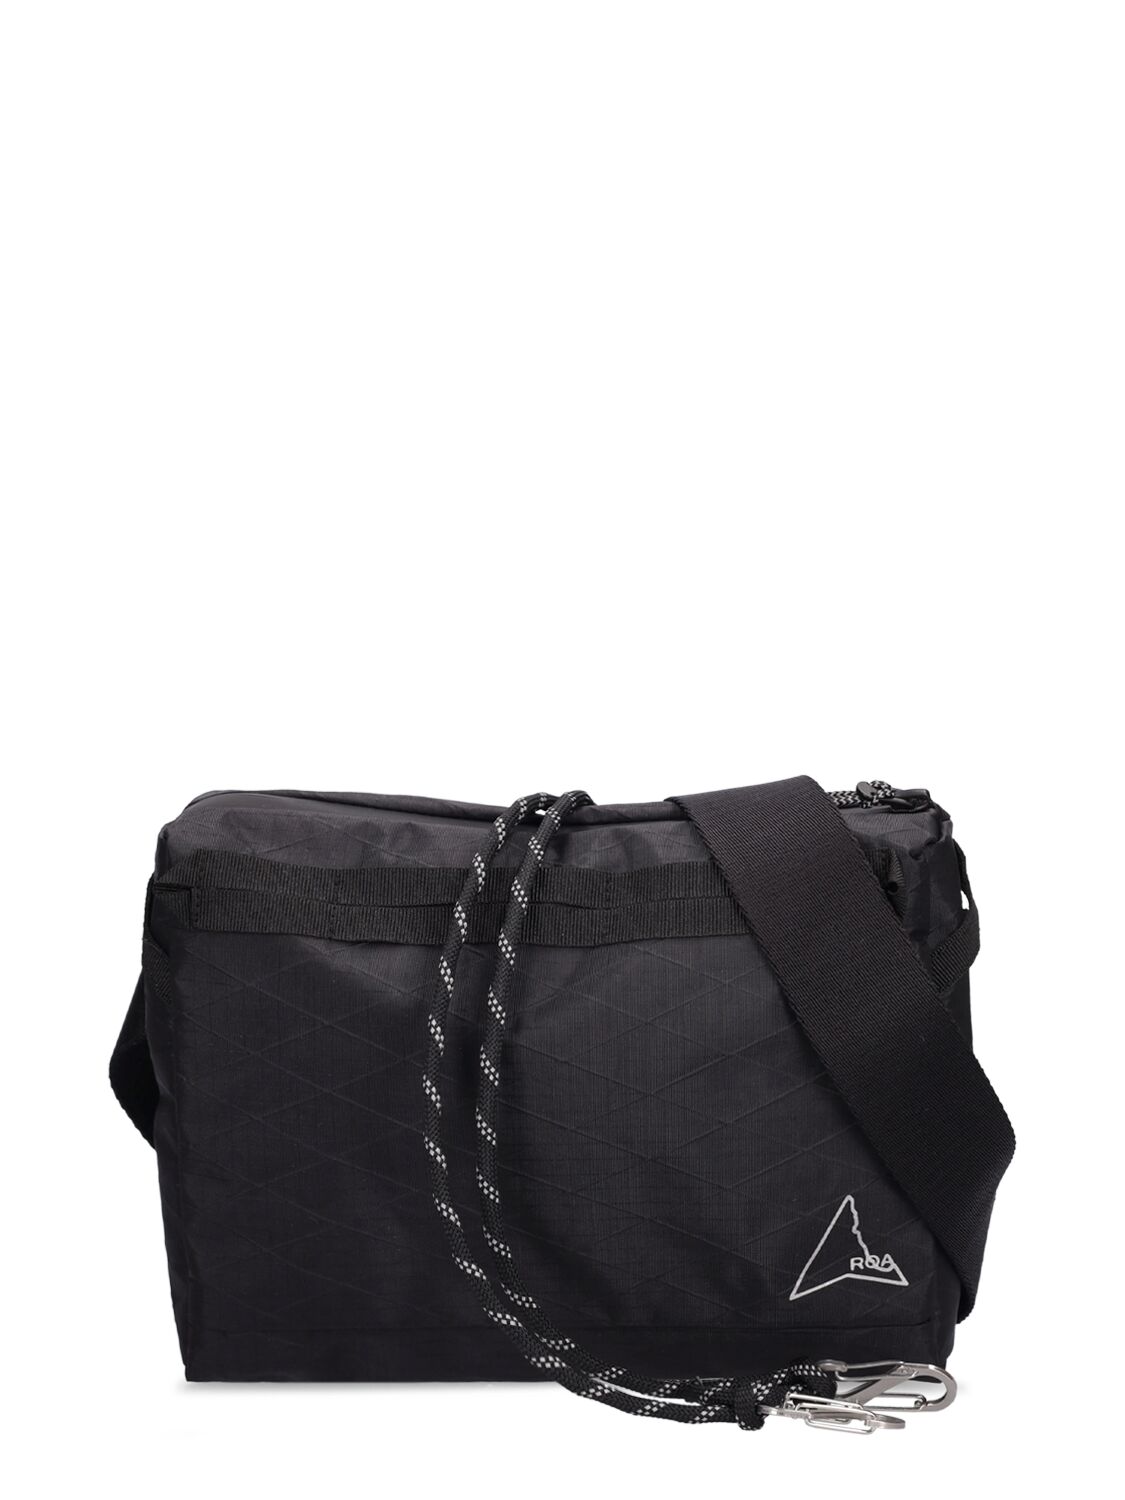 Image of Crossbody Bag